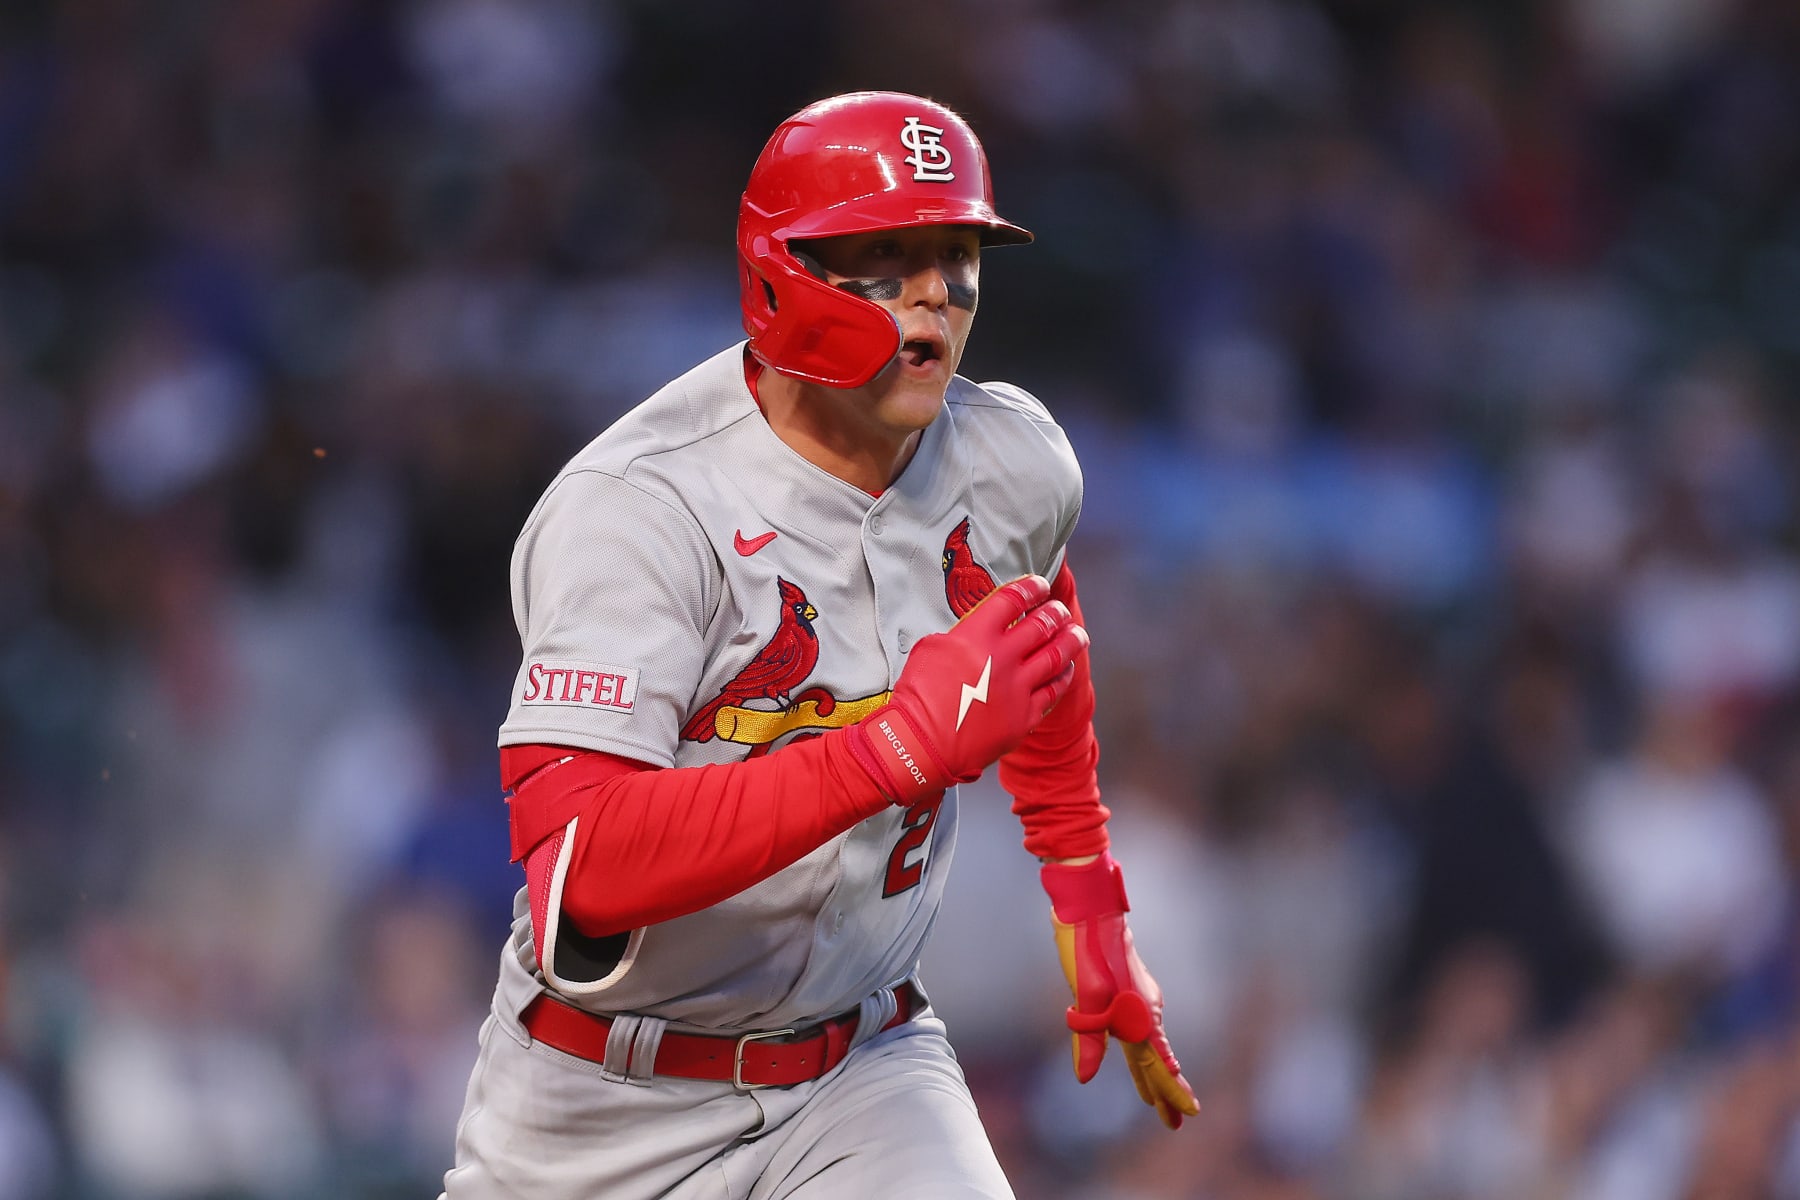 Cardinals' Lars Nootbaar gets emotional as mom surprises him on